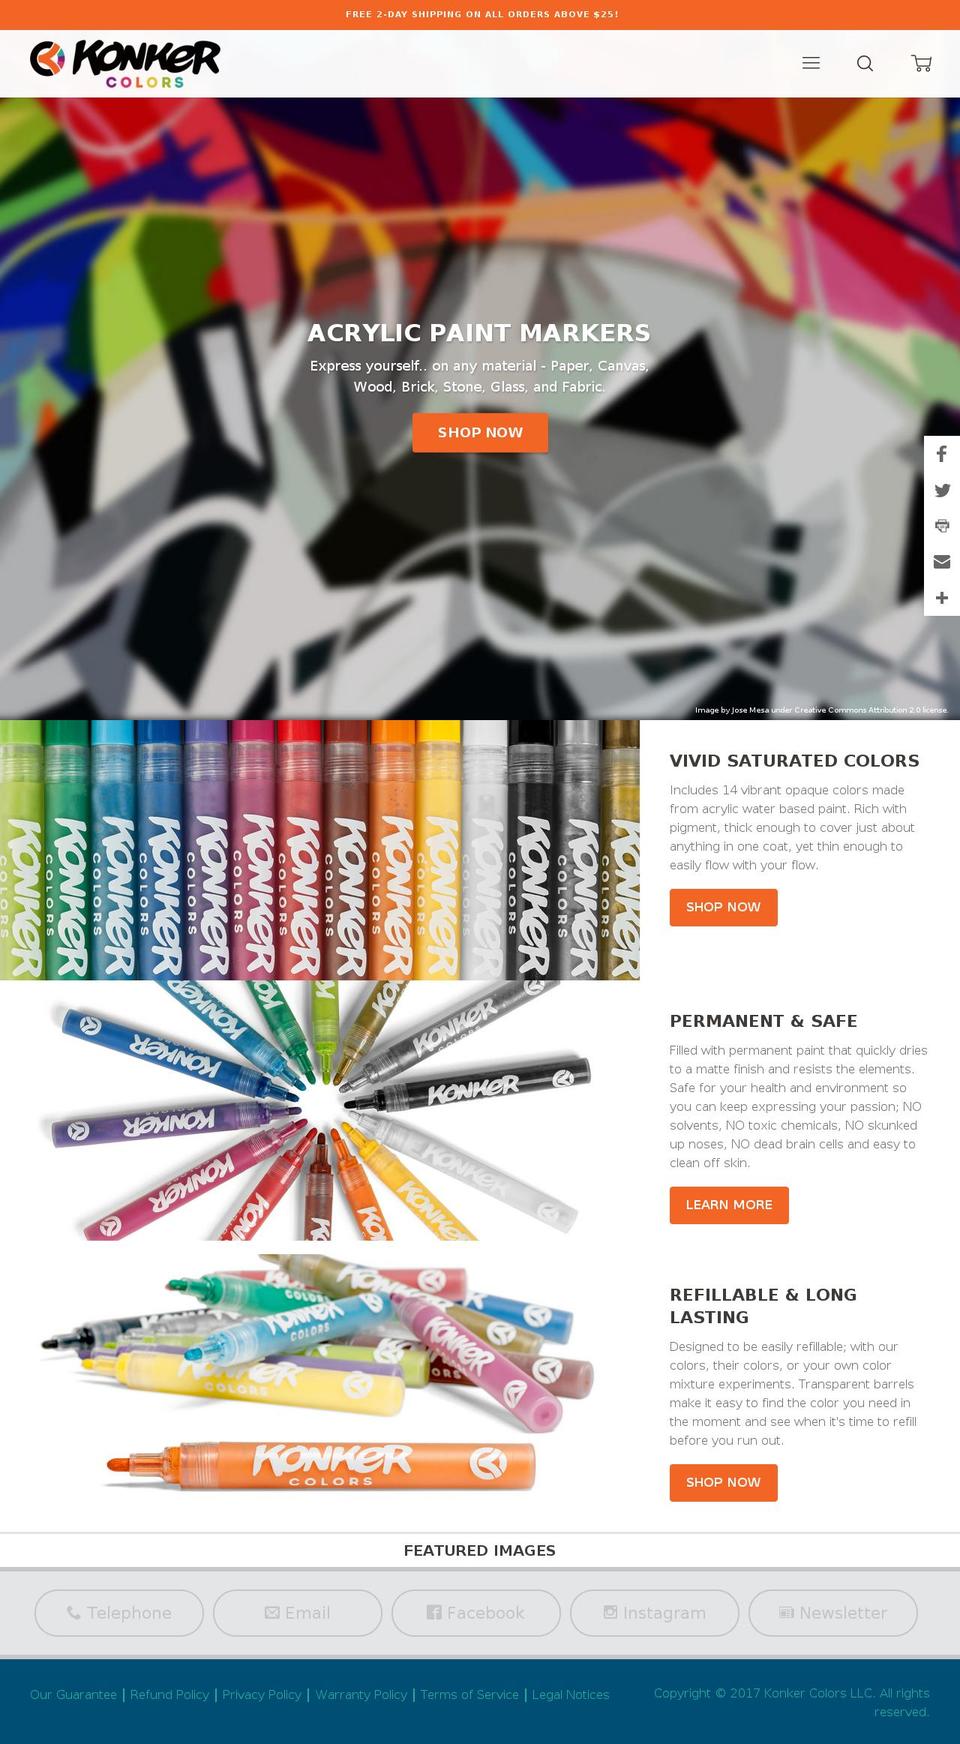 konkercolors.com shopify website screenshot